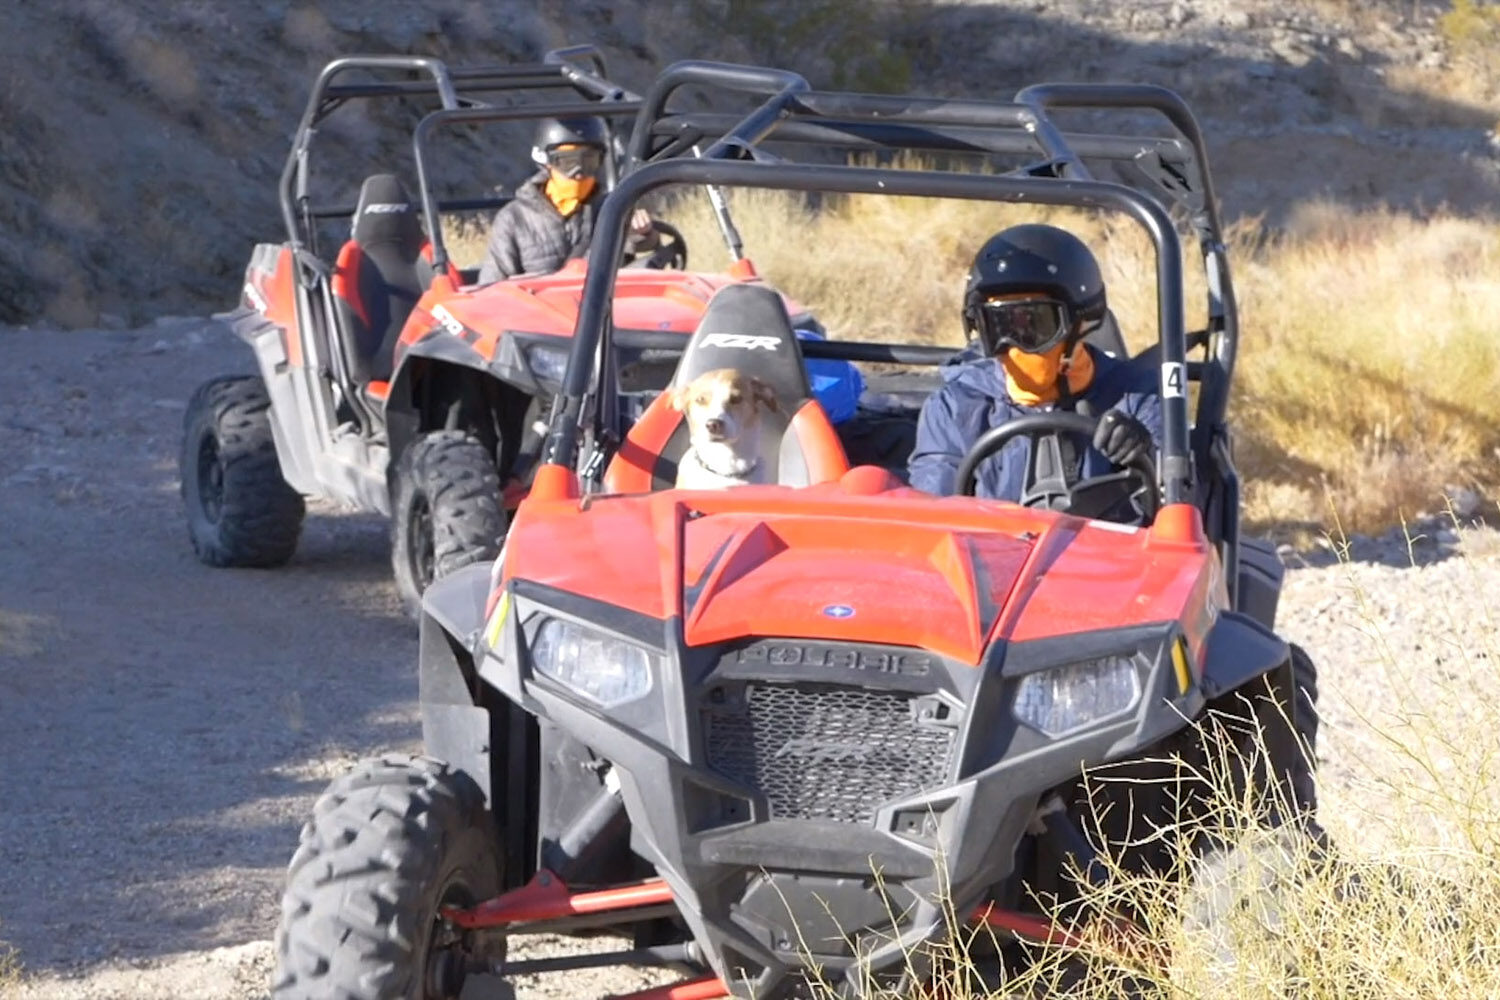 Two ATVs touring the desert